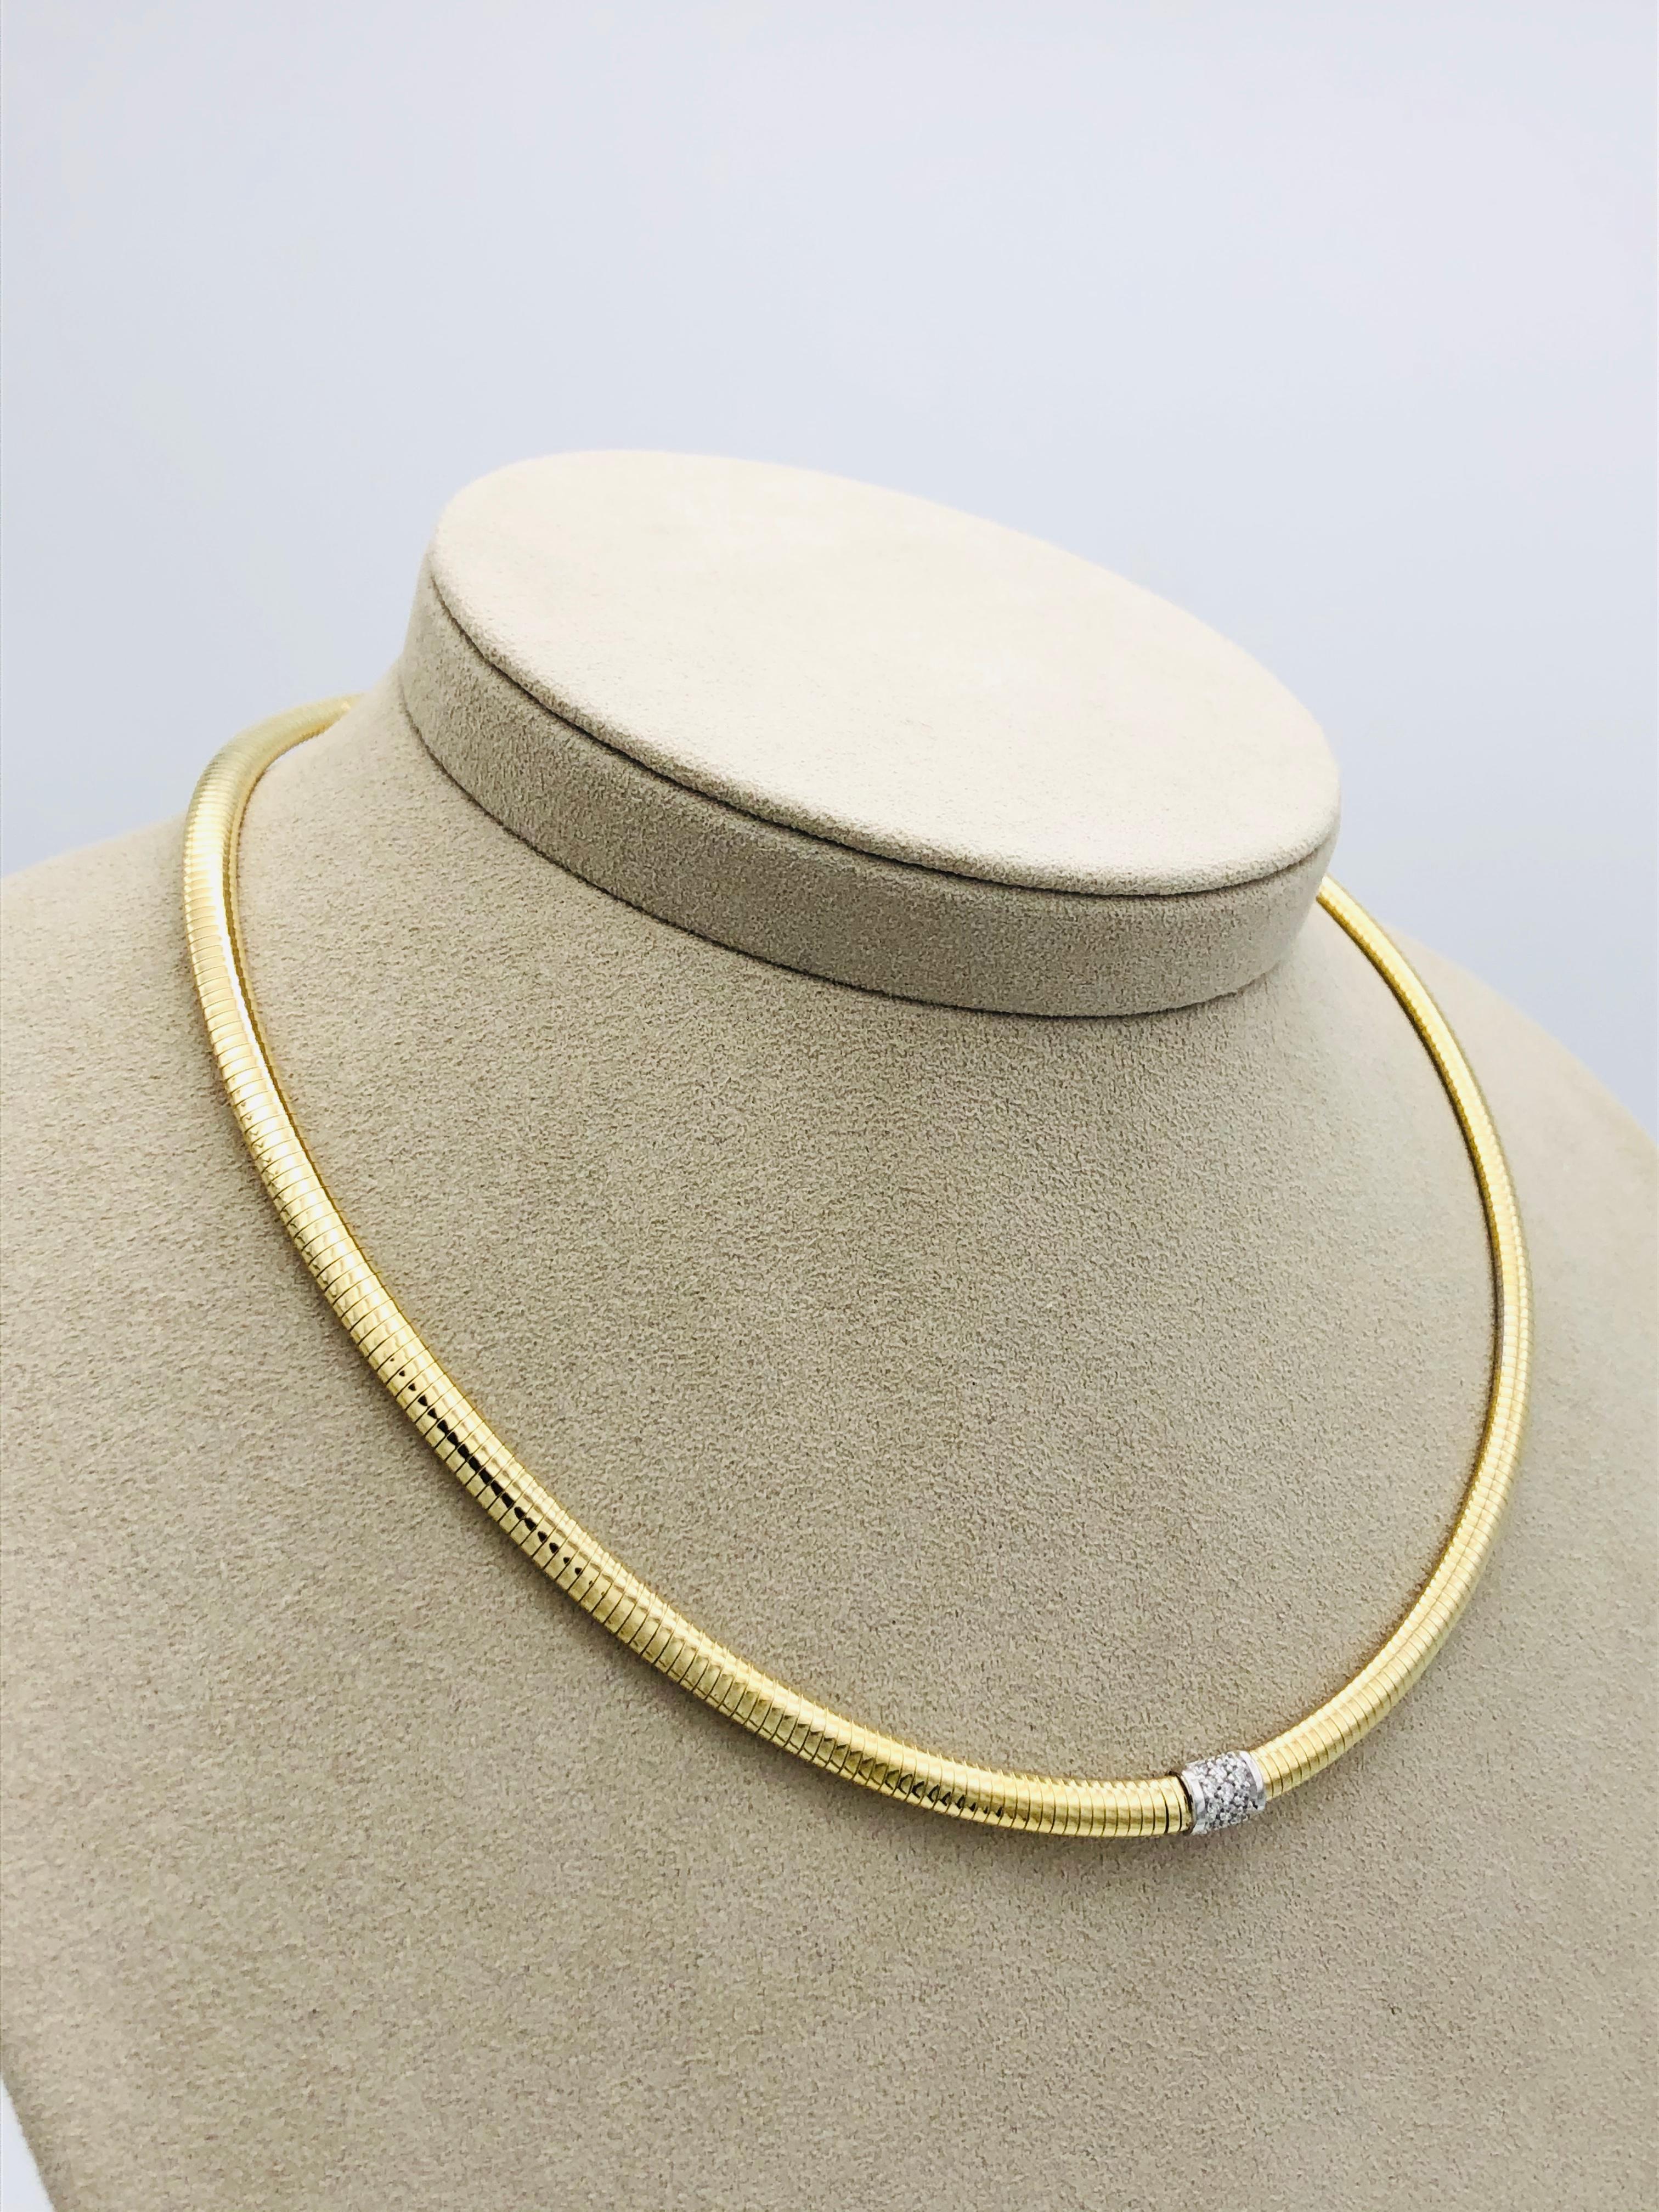 Yellow Gold 18 Karat Choker Necklace and Diamonds Brilliant Cut 1